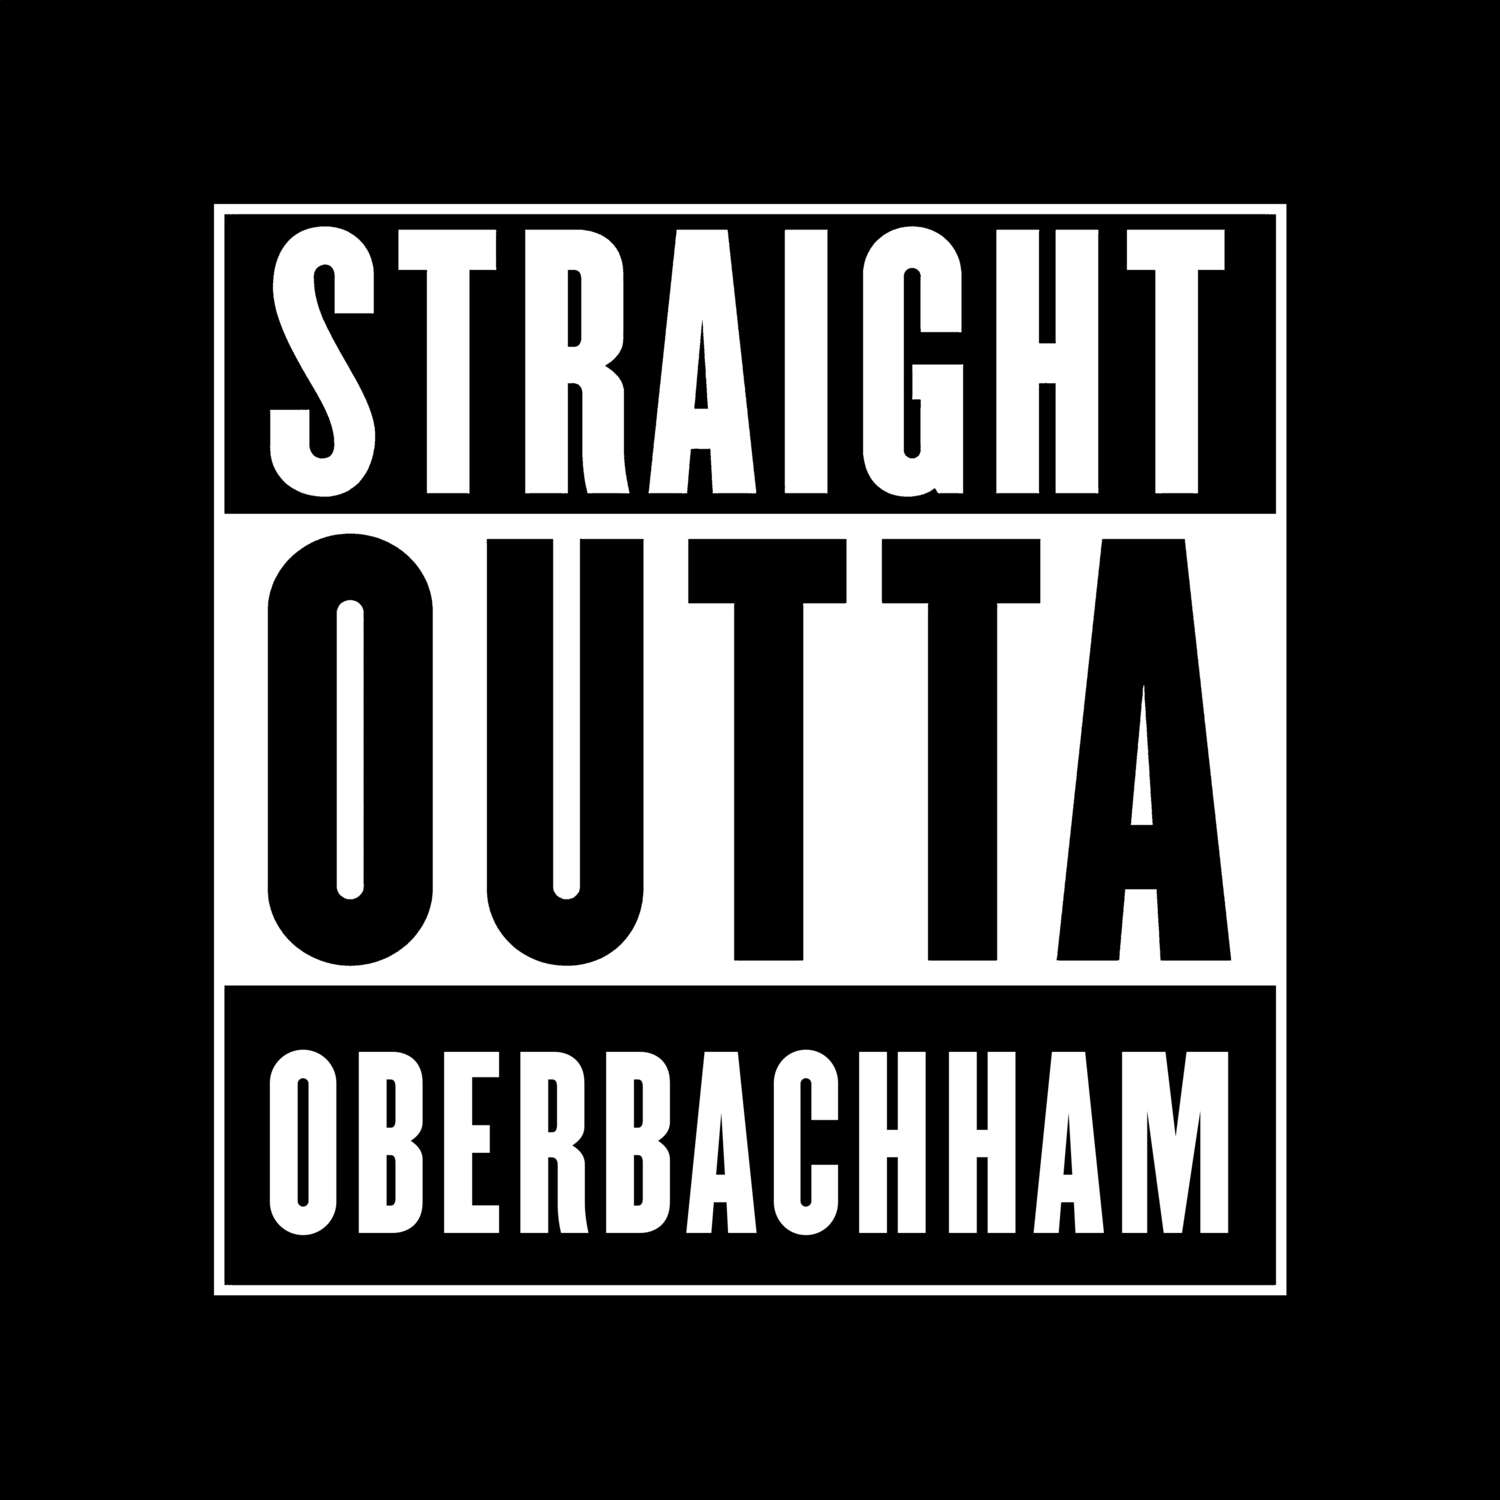 Oberbachham T-Shirt »Straight Outta«